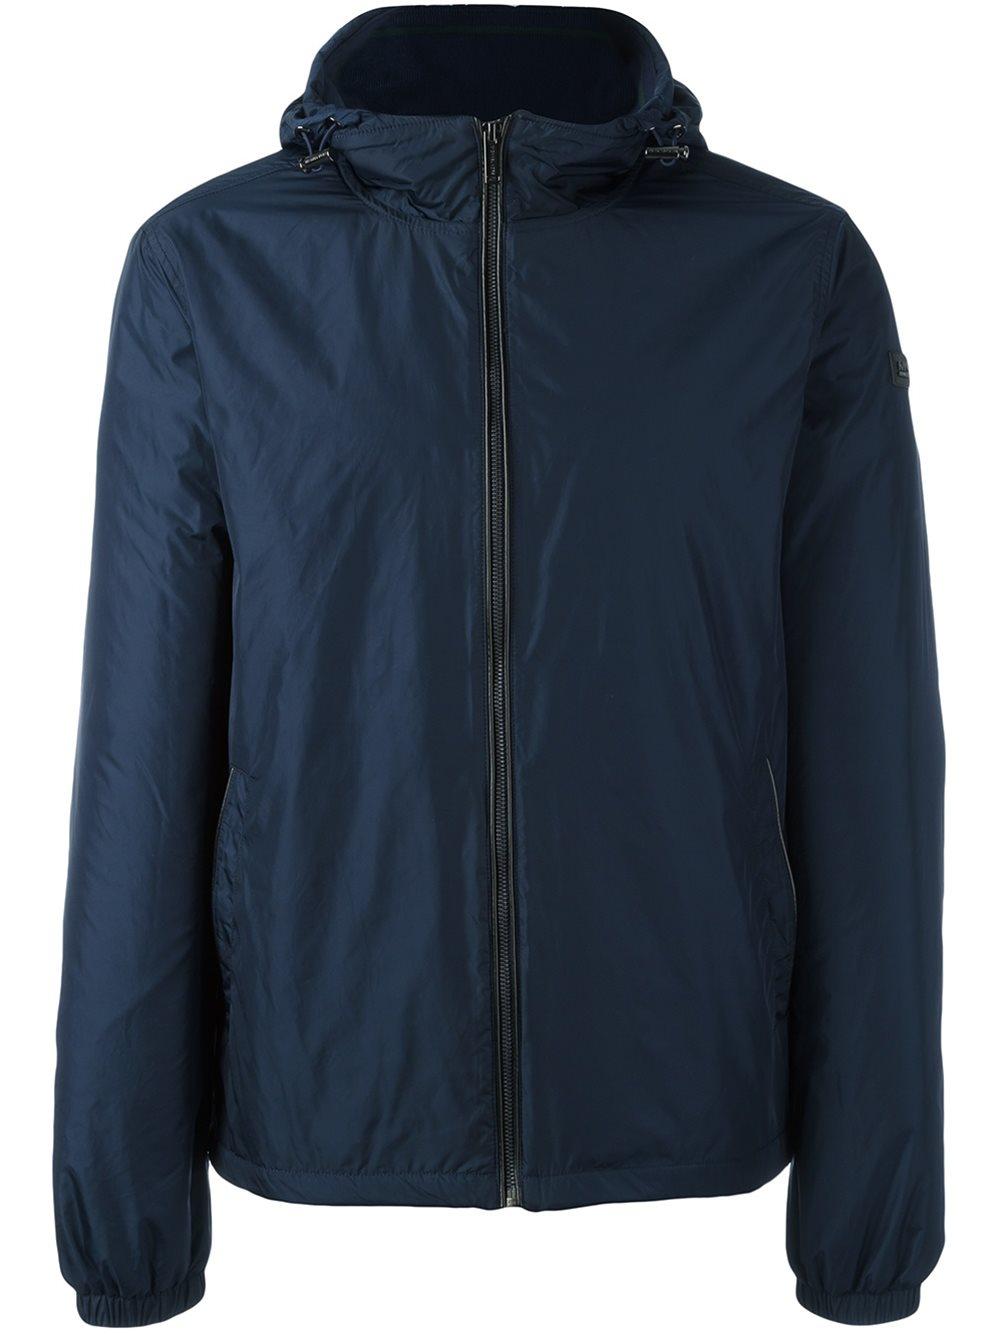 Lyst - Michael Kors Hooded Zipped Jacket in Blue for Men